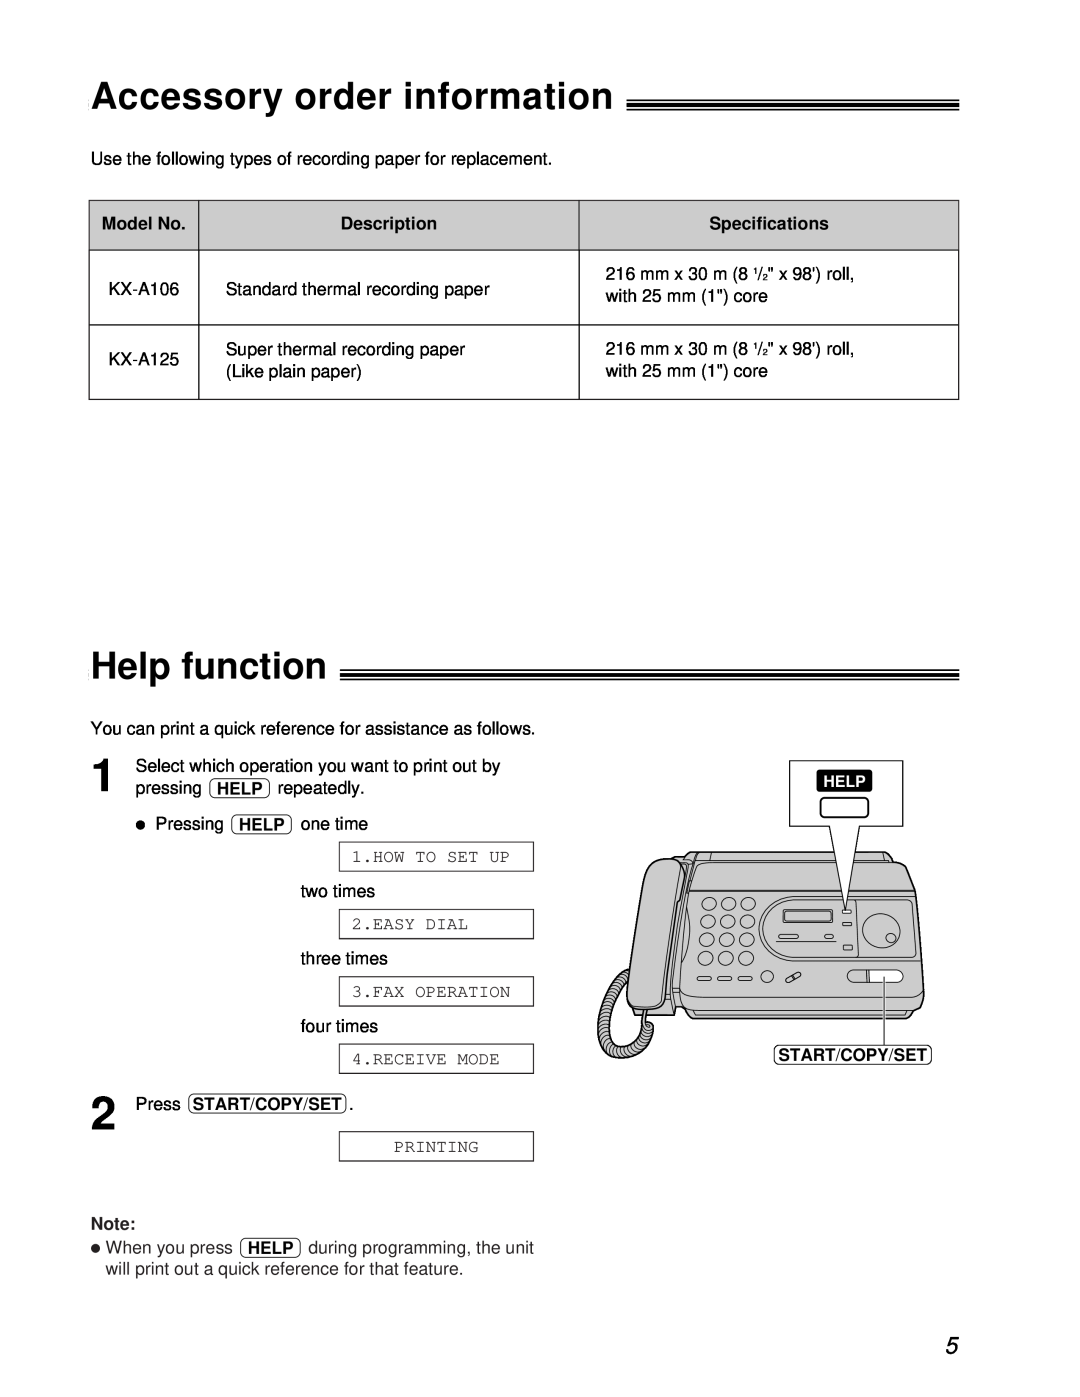 Panasonic KX-FT31BX Accessory order information, Help function, Model No, Description, Specifications, Start/Copy/Set 